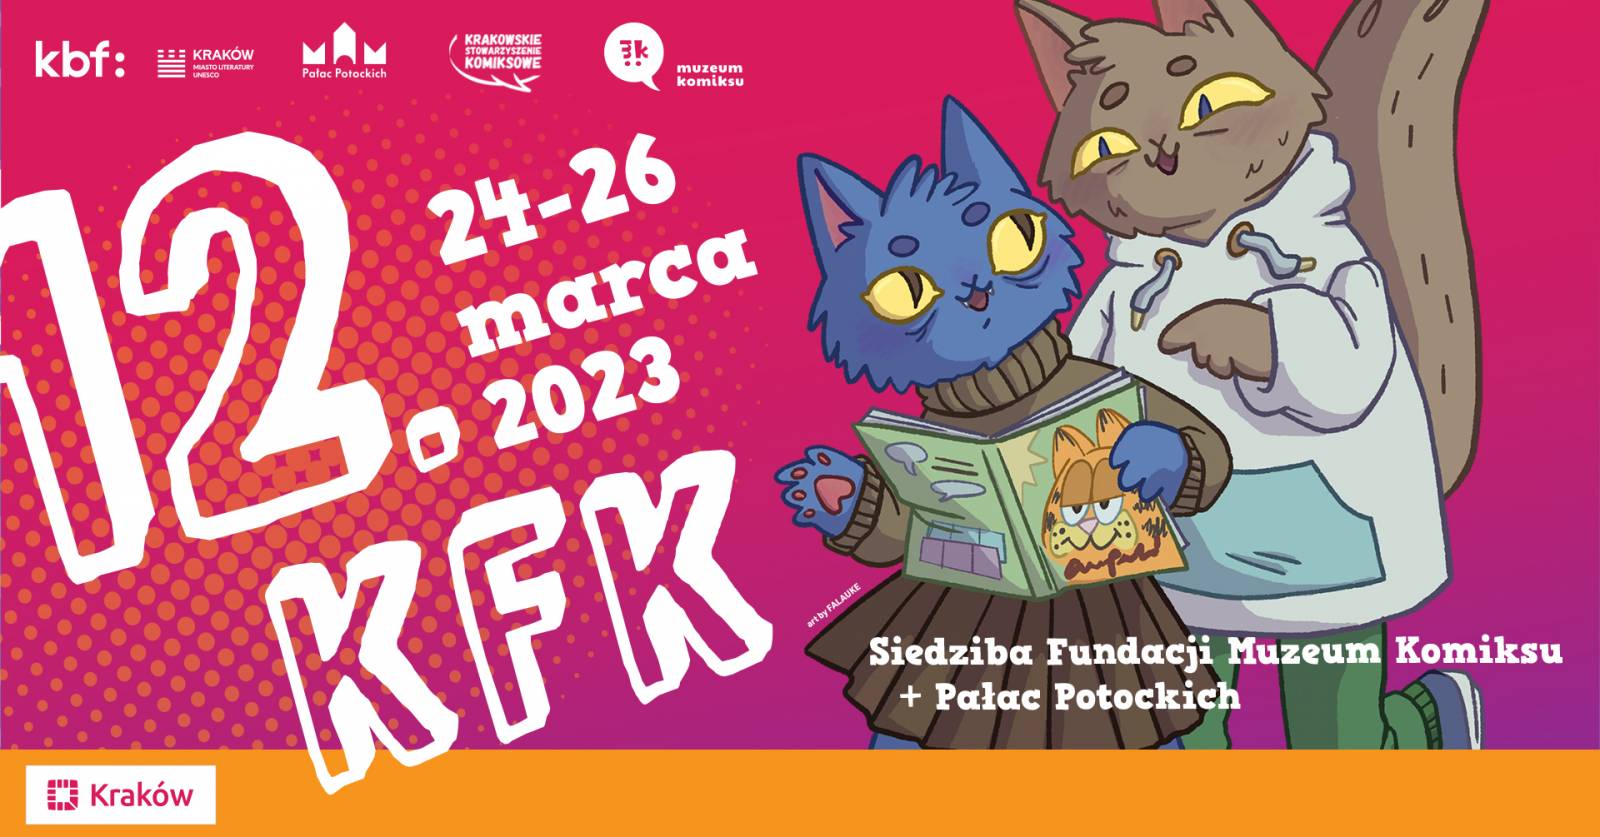 12th Kraków Comic Book Festival